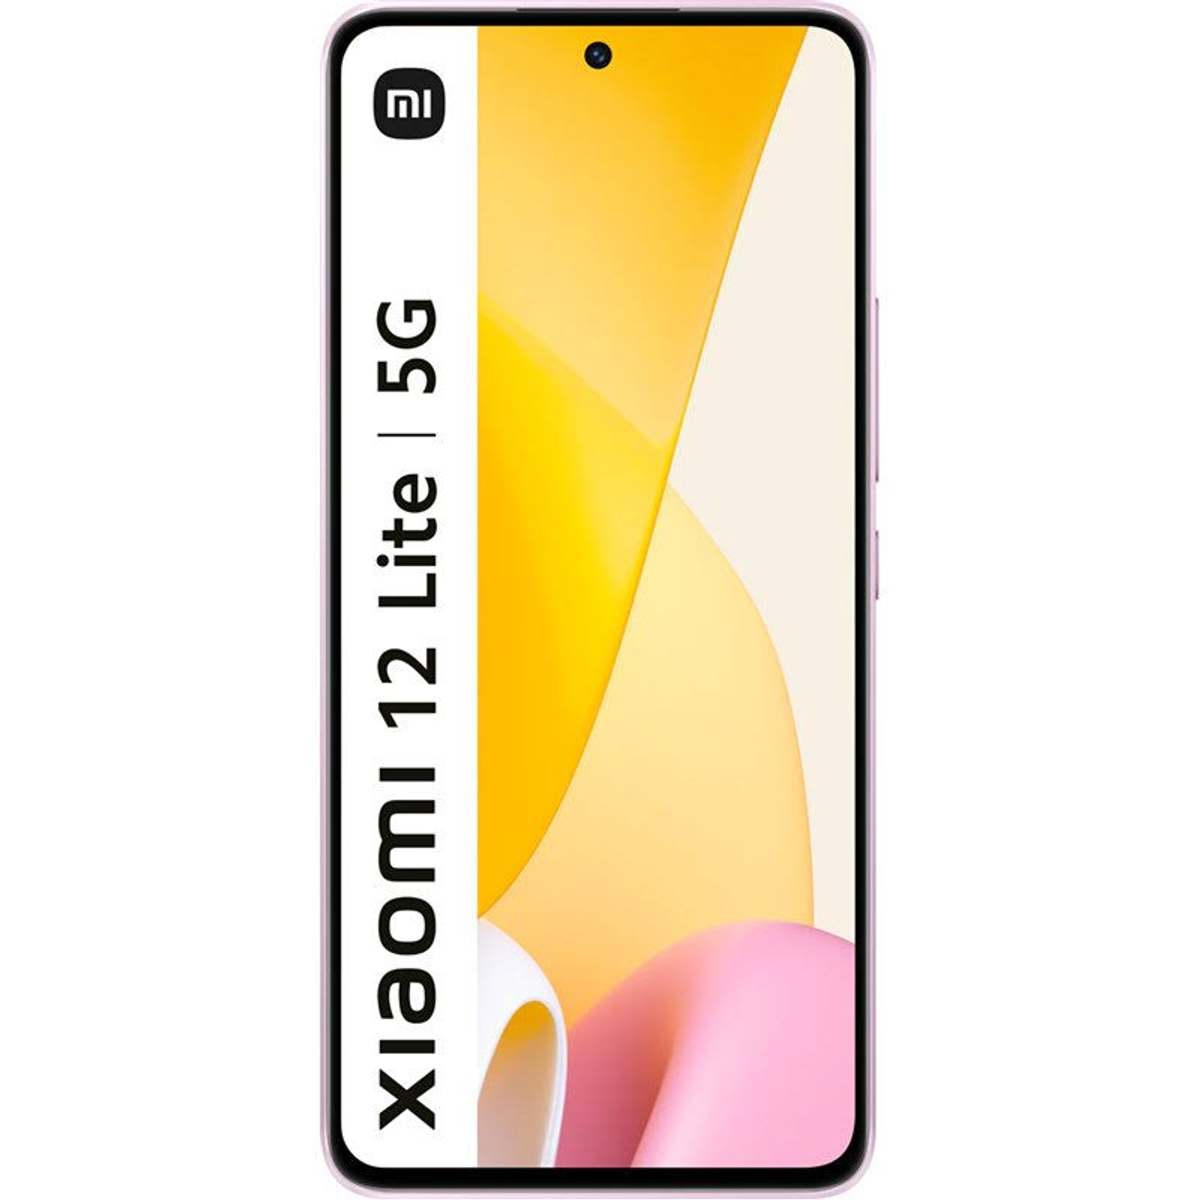 LITE LITE 8+128GB XIAOMI PINK Pink GB Dual 12 Lite SIM 128